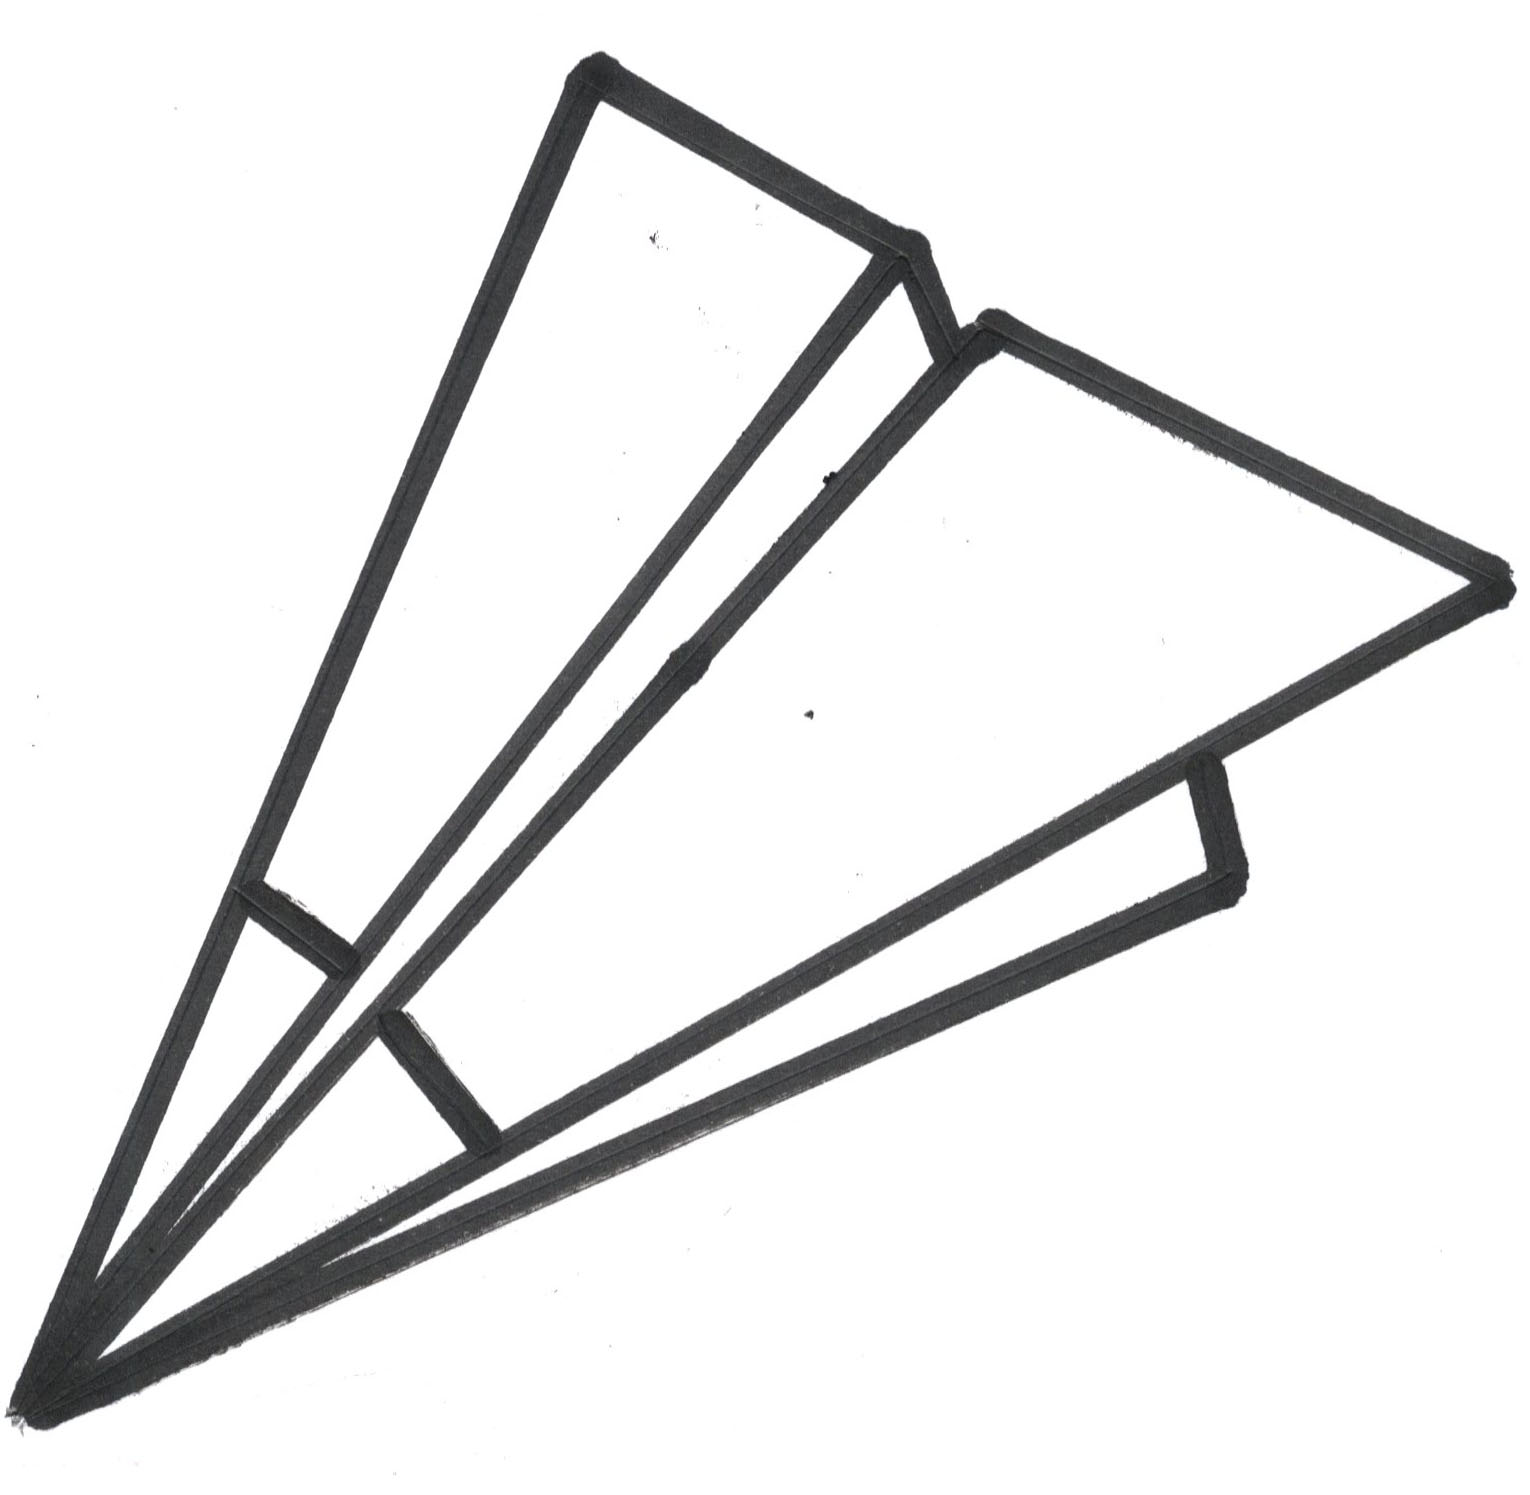 Paper Airplane Clip Art Clipa